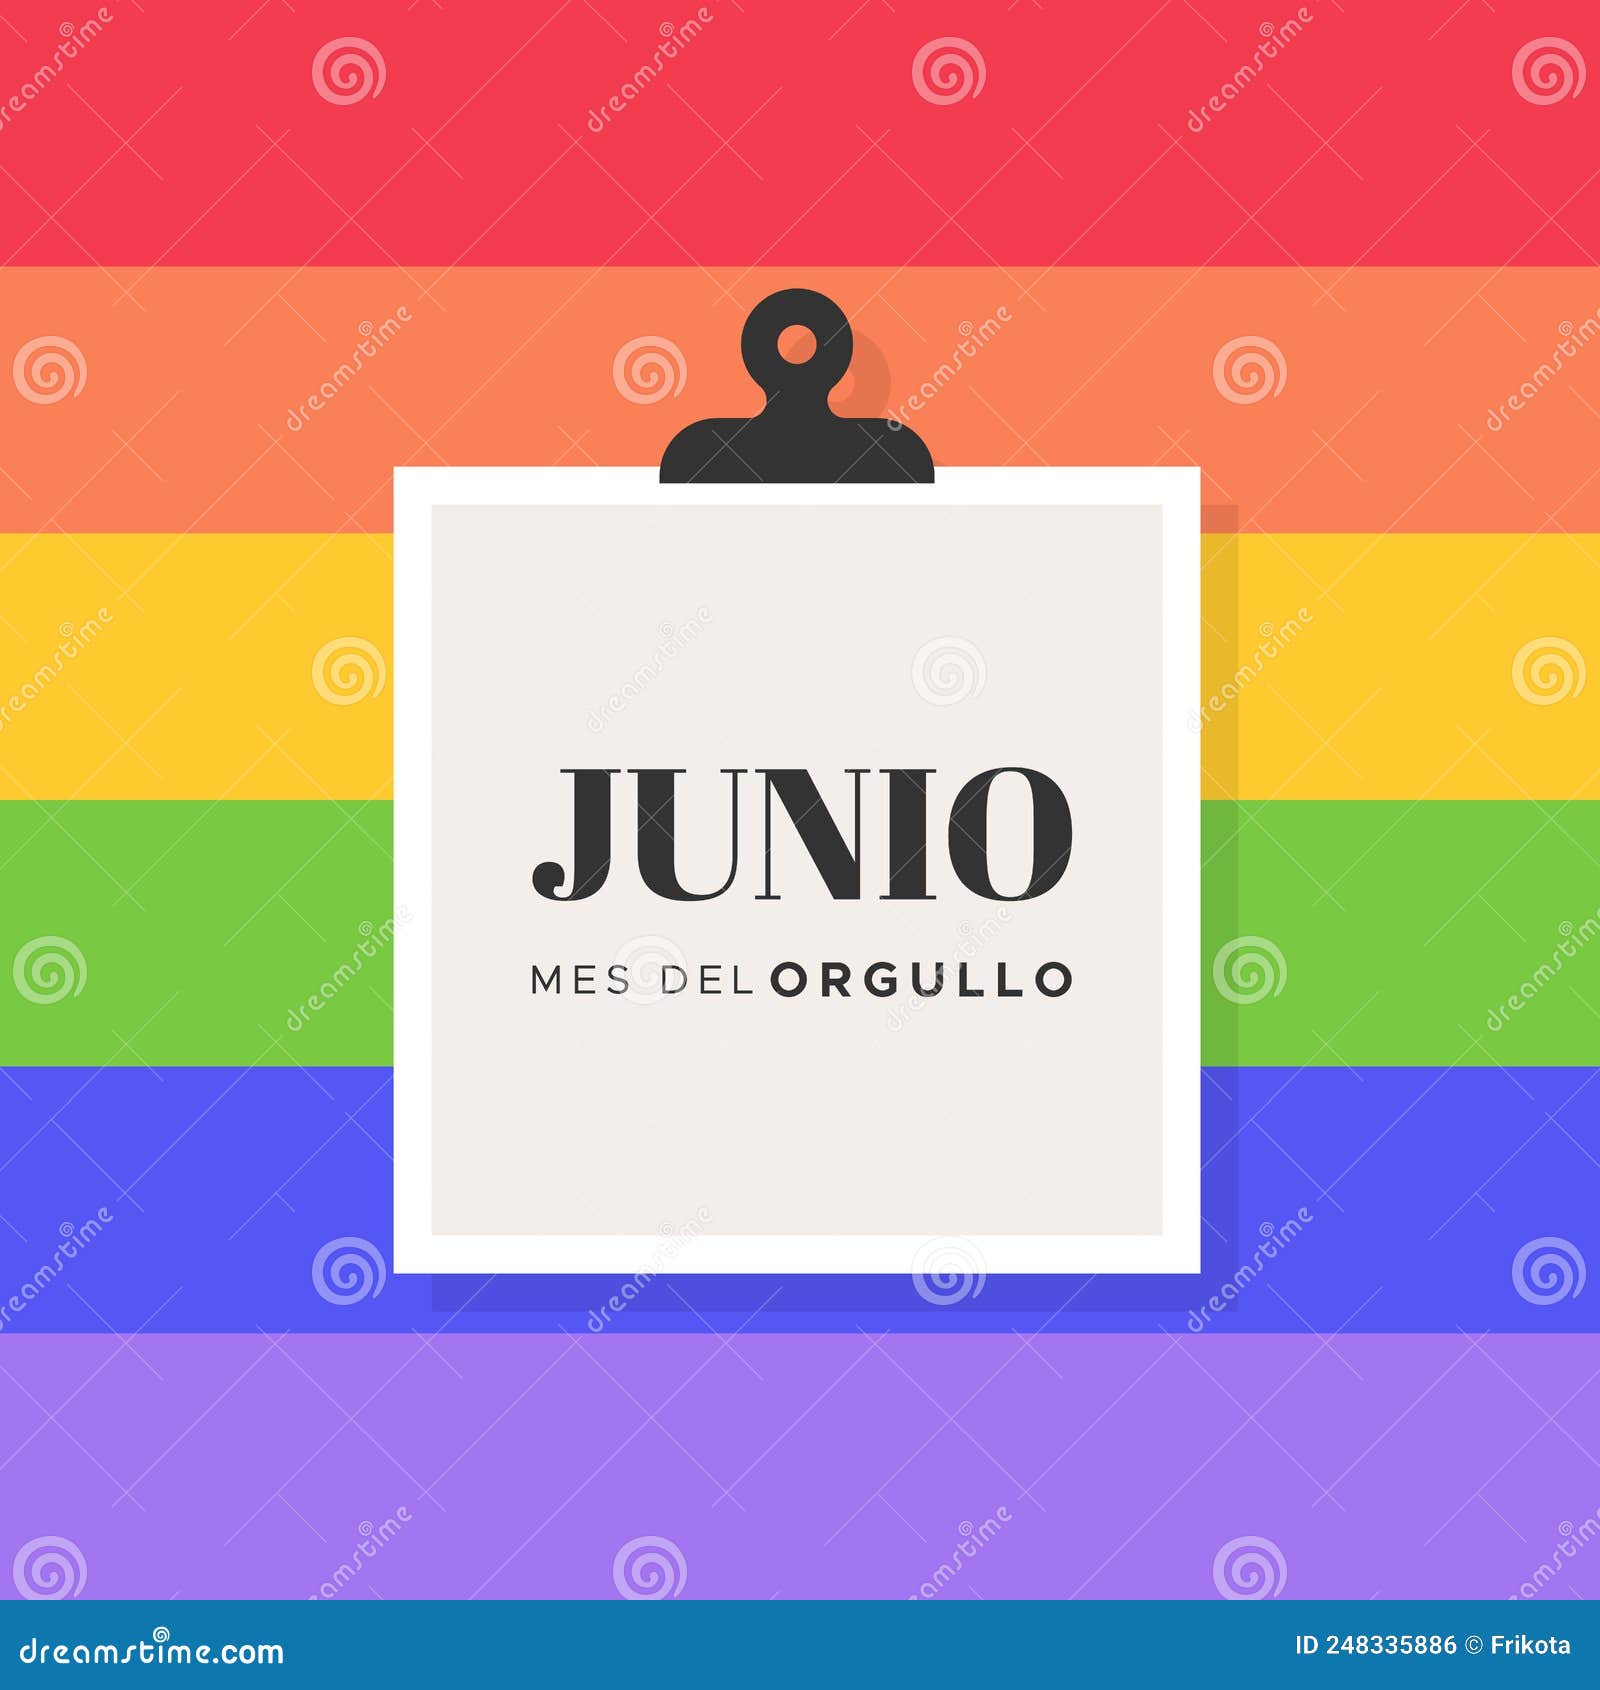 june pride month. spanish. junio mes del orgullo. rainbow striped background. lgbtq movement. concept of equality, diversity, love